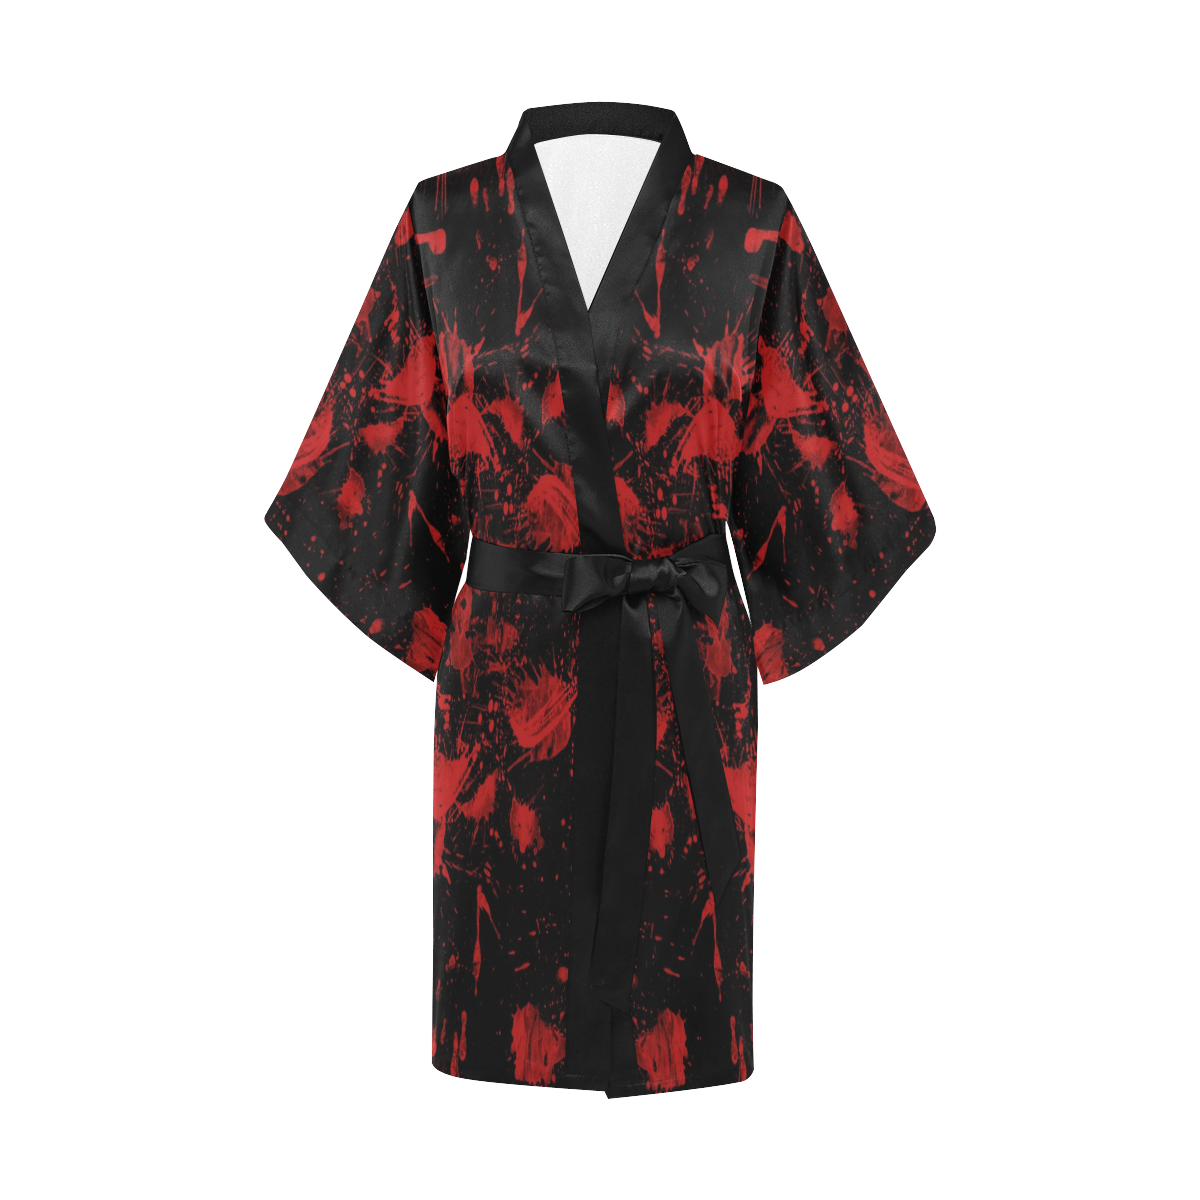 Scary Blood by Artdream Kimono Robe